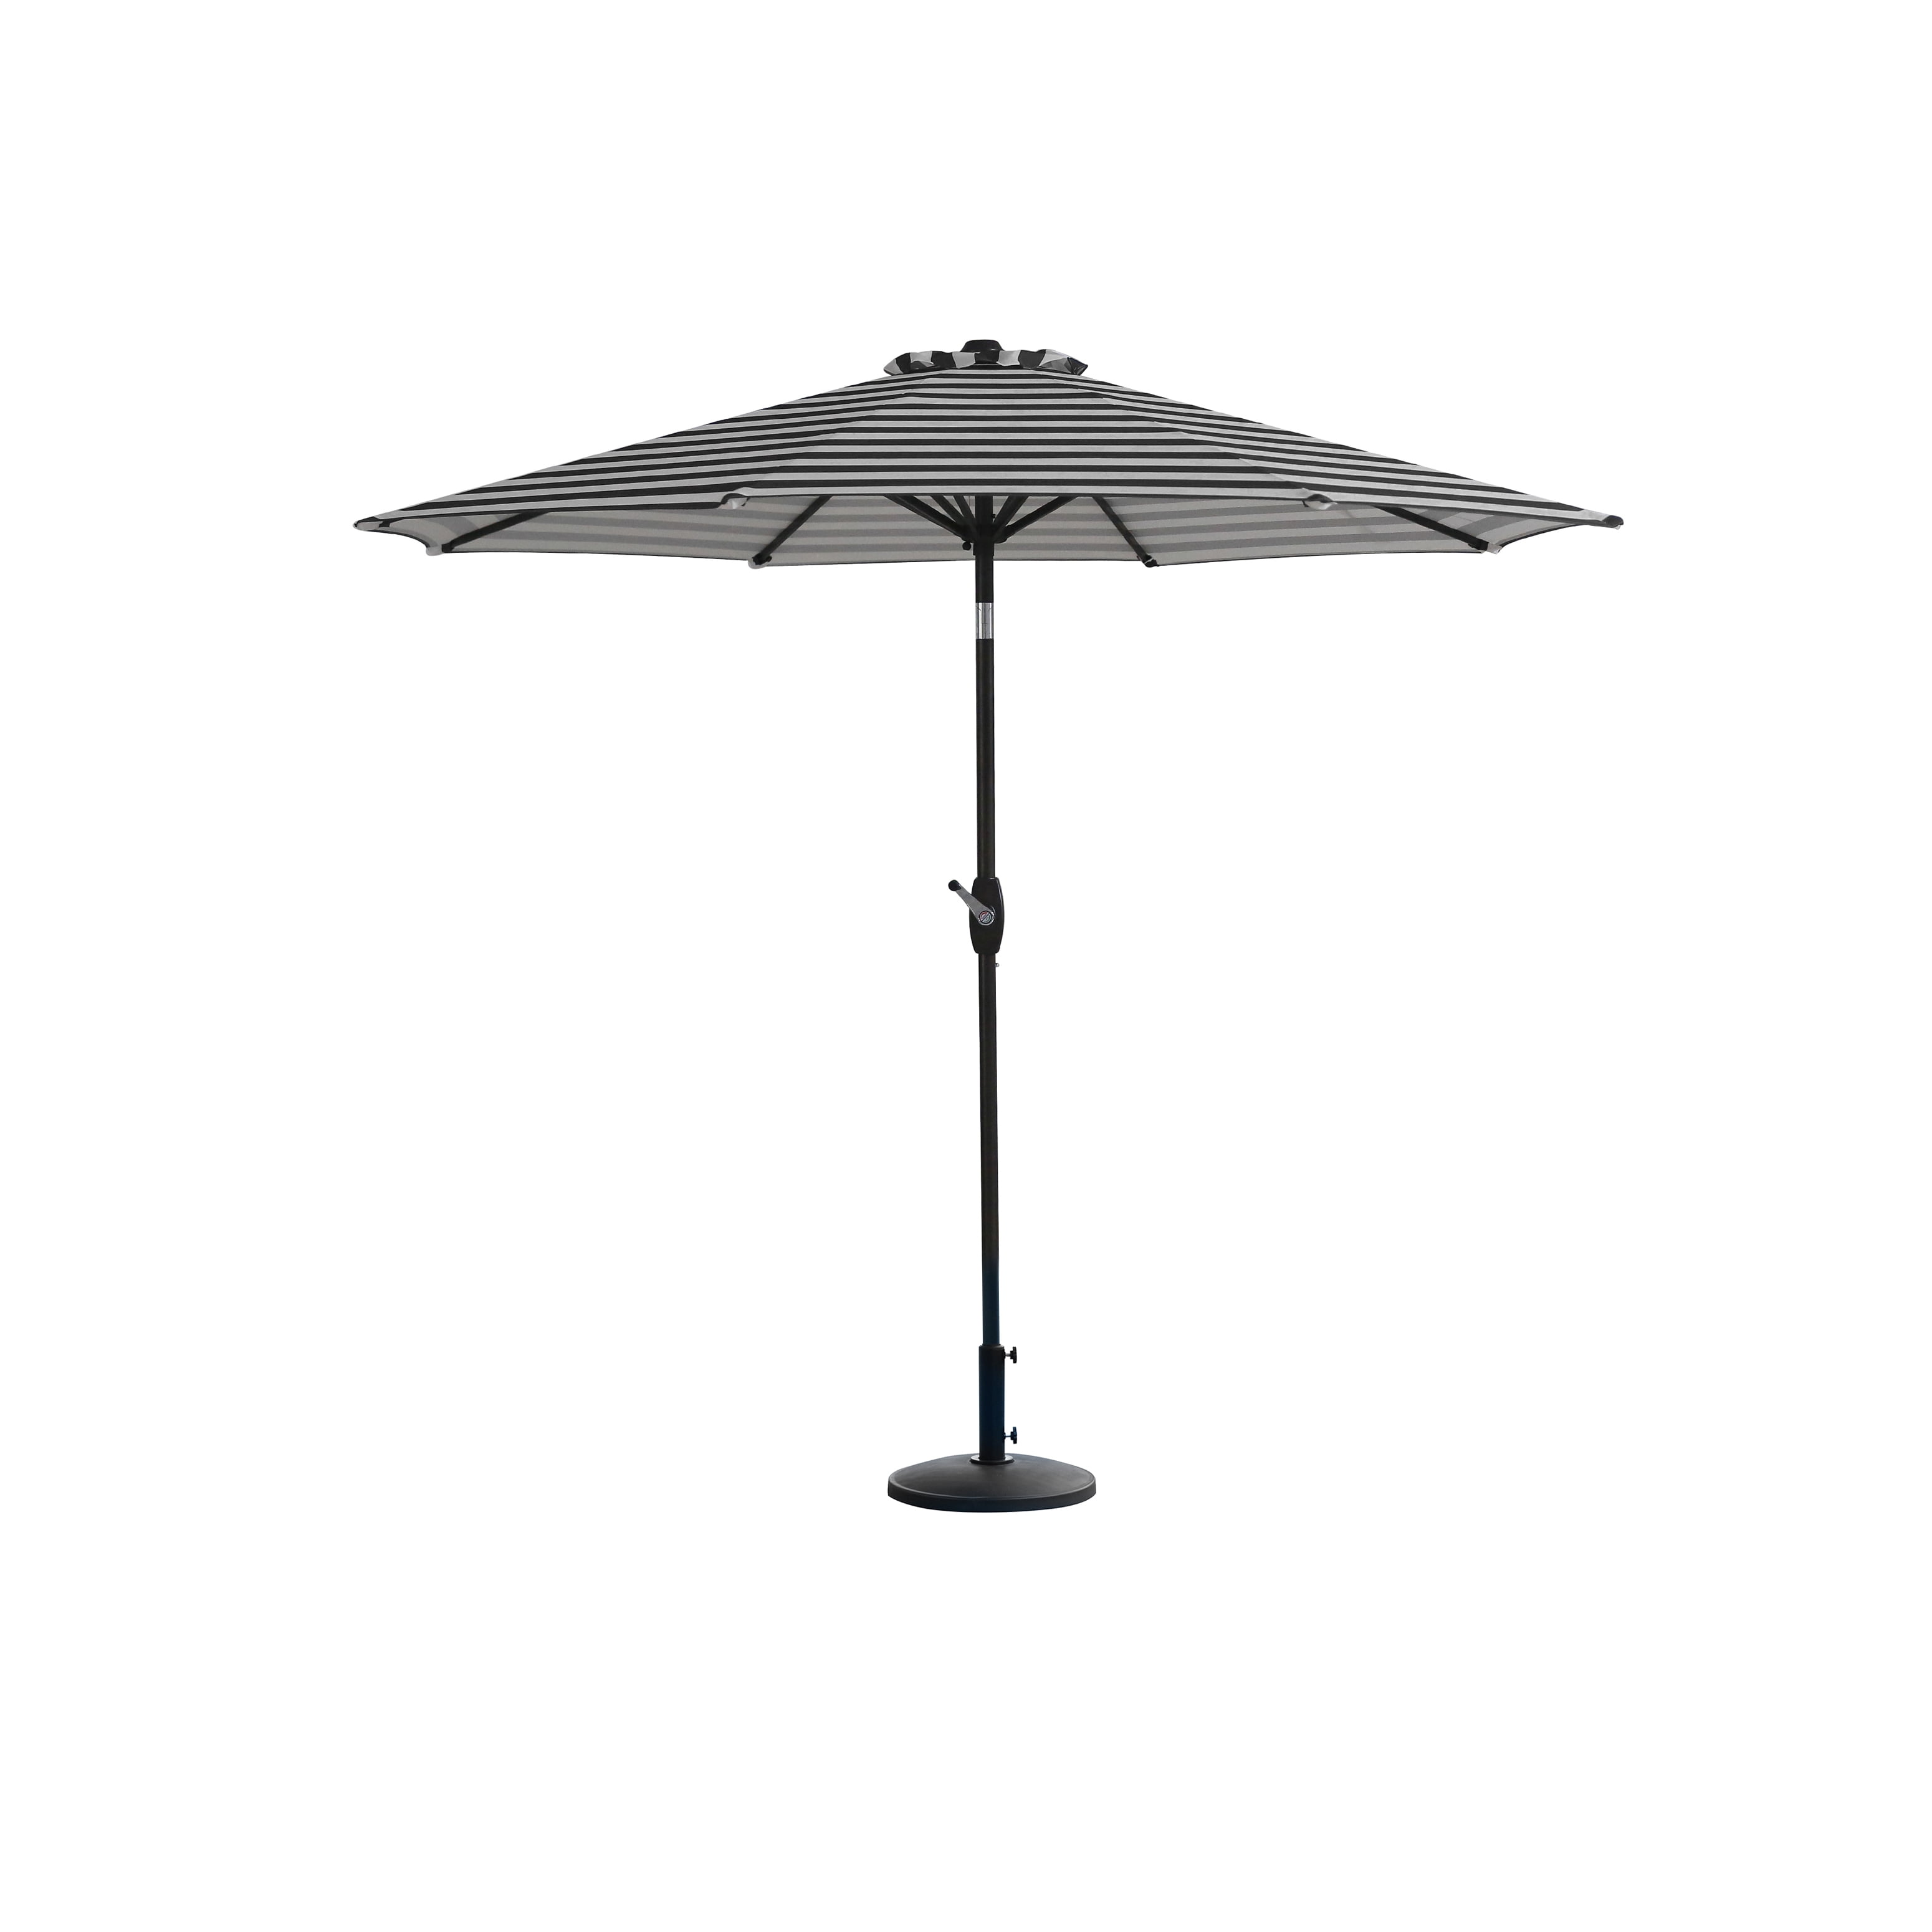 Yinuoday Patio Beach Umbrella Base Portable Water Weights Bag Waterproof Shade Up Umbrella Base Stand for Outdoor Indoor Umbrella Holder 